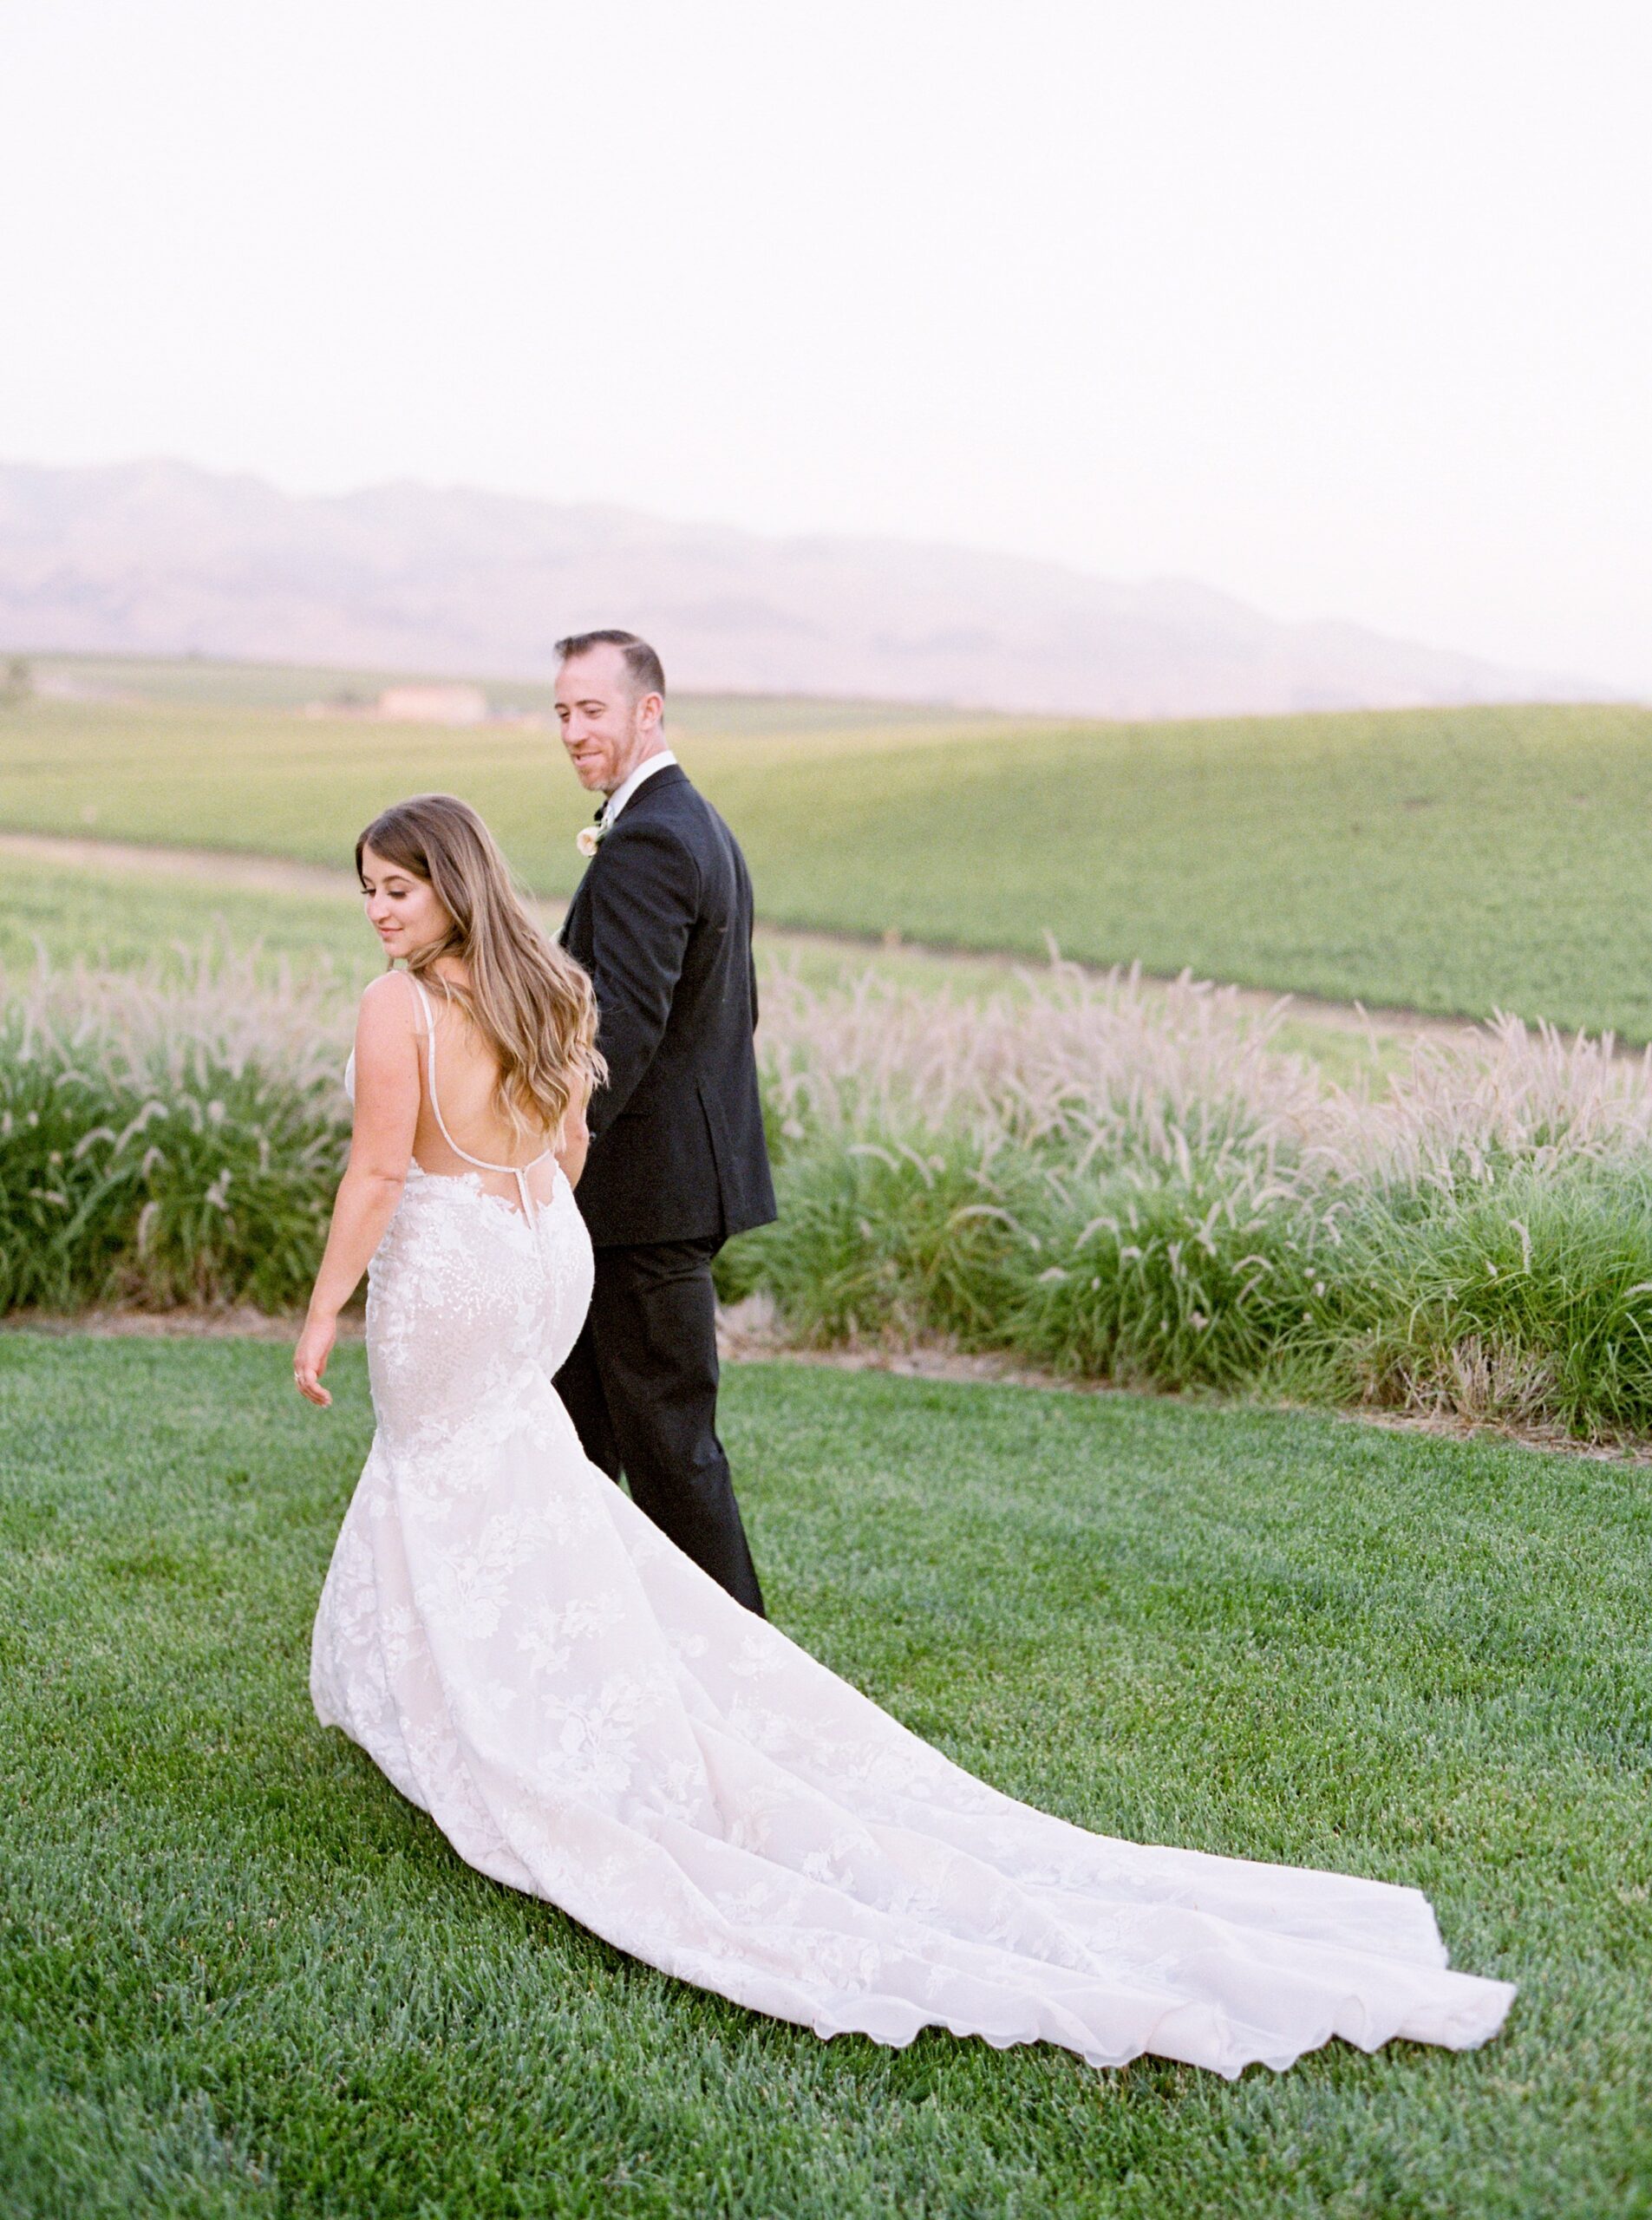 Greengate Ranch and Vineyard Wedding - Alana and James